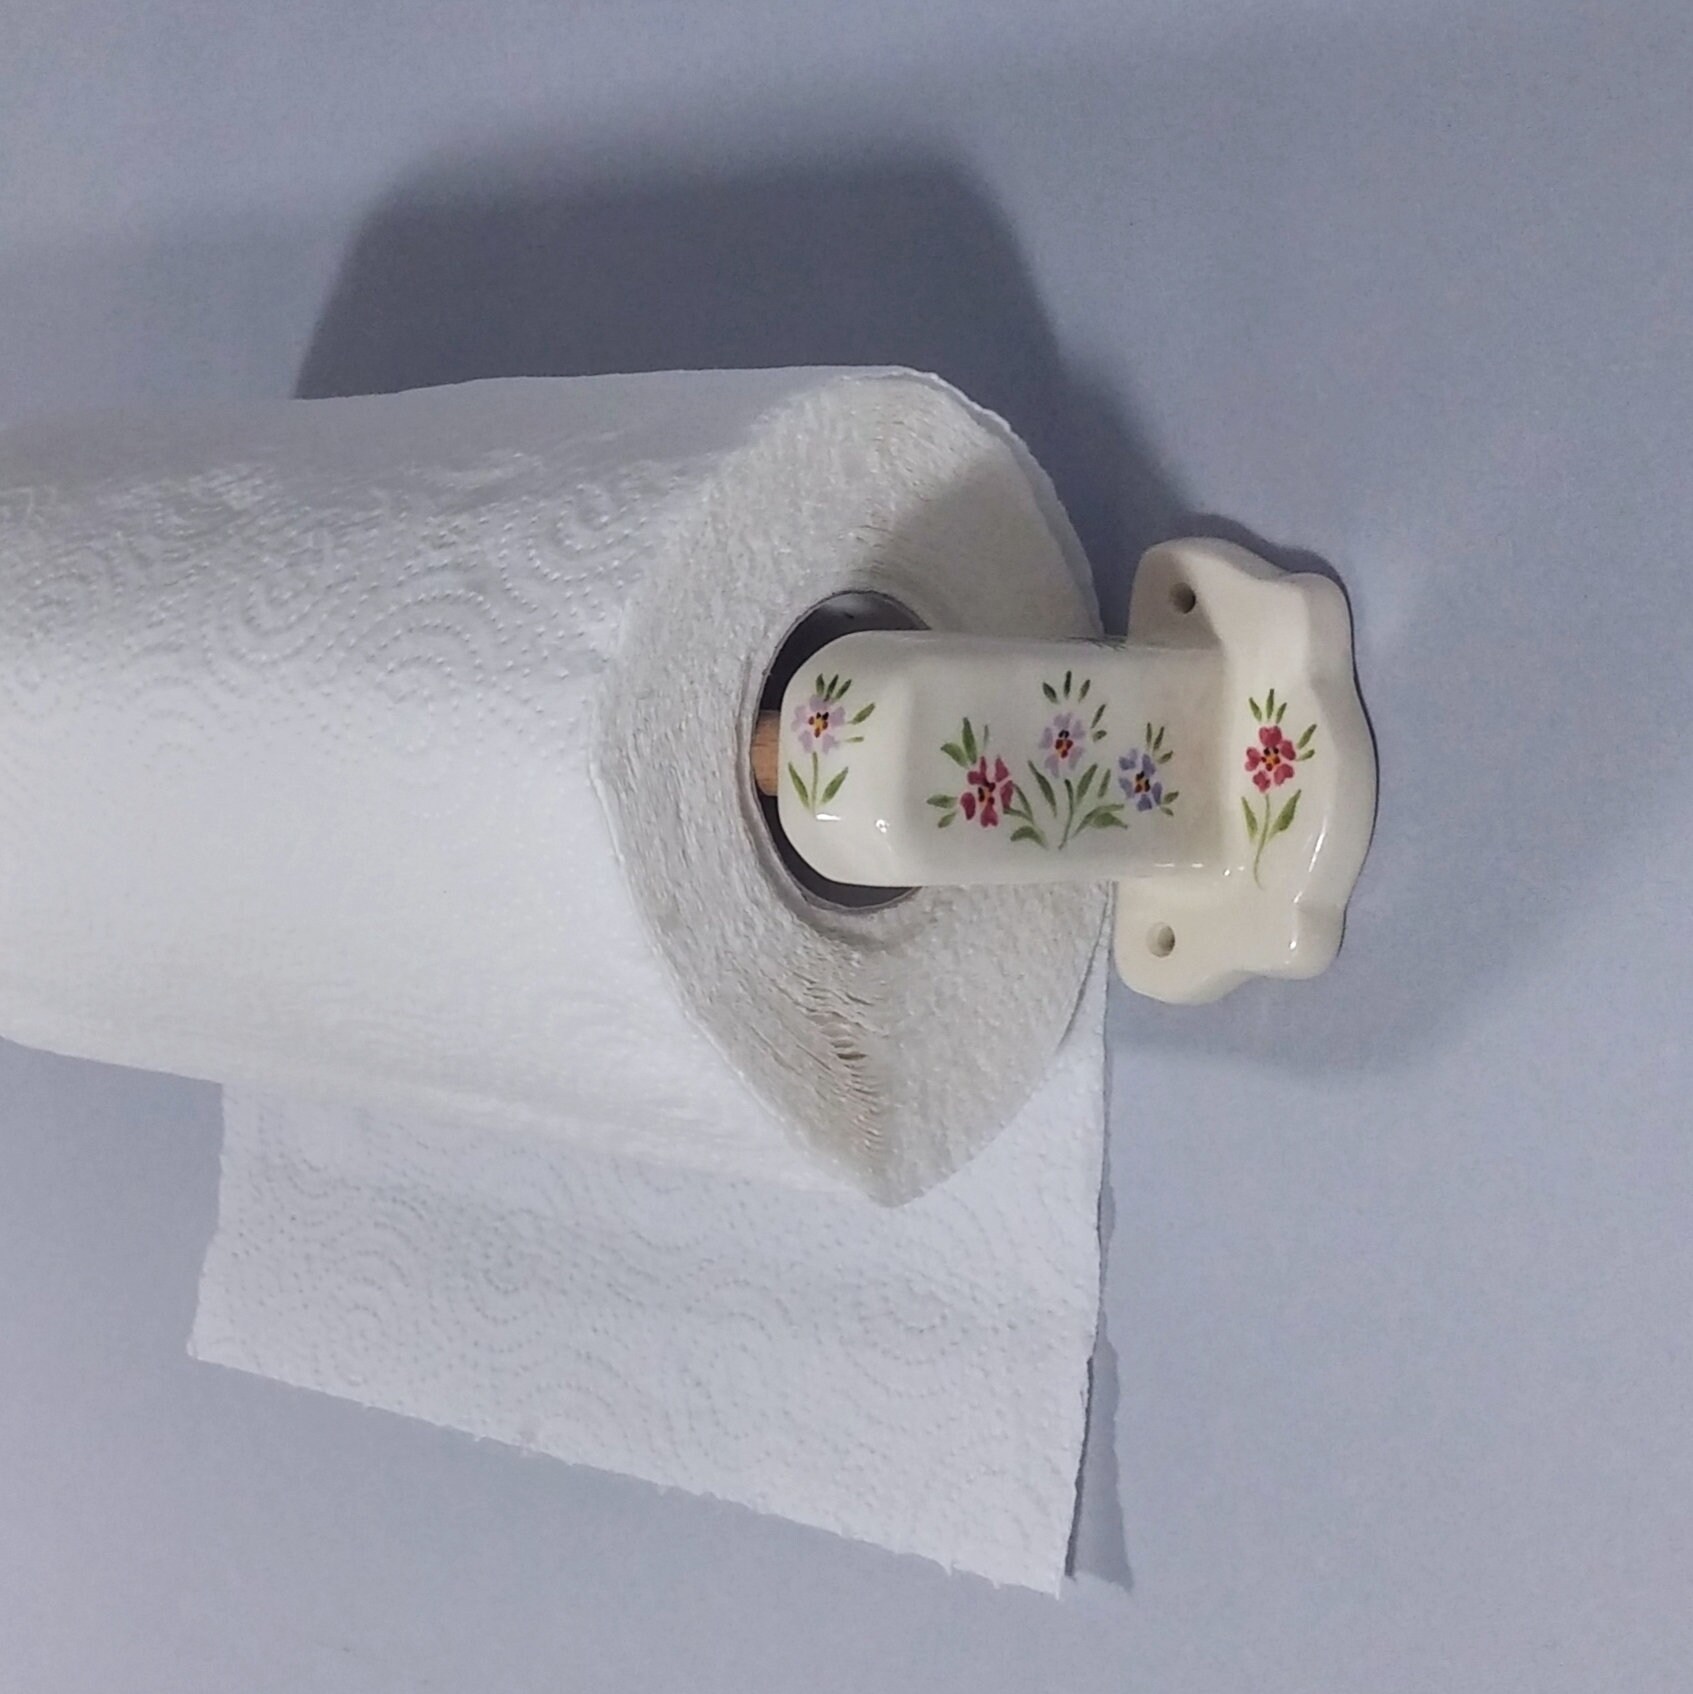 Towel Paper Holder, Ceramic Paper Towel Holder Wall Mounted, Retro